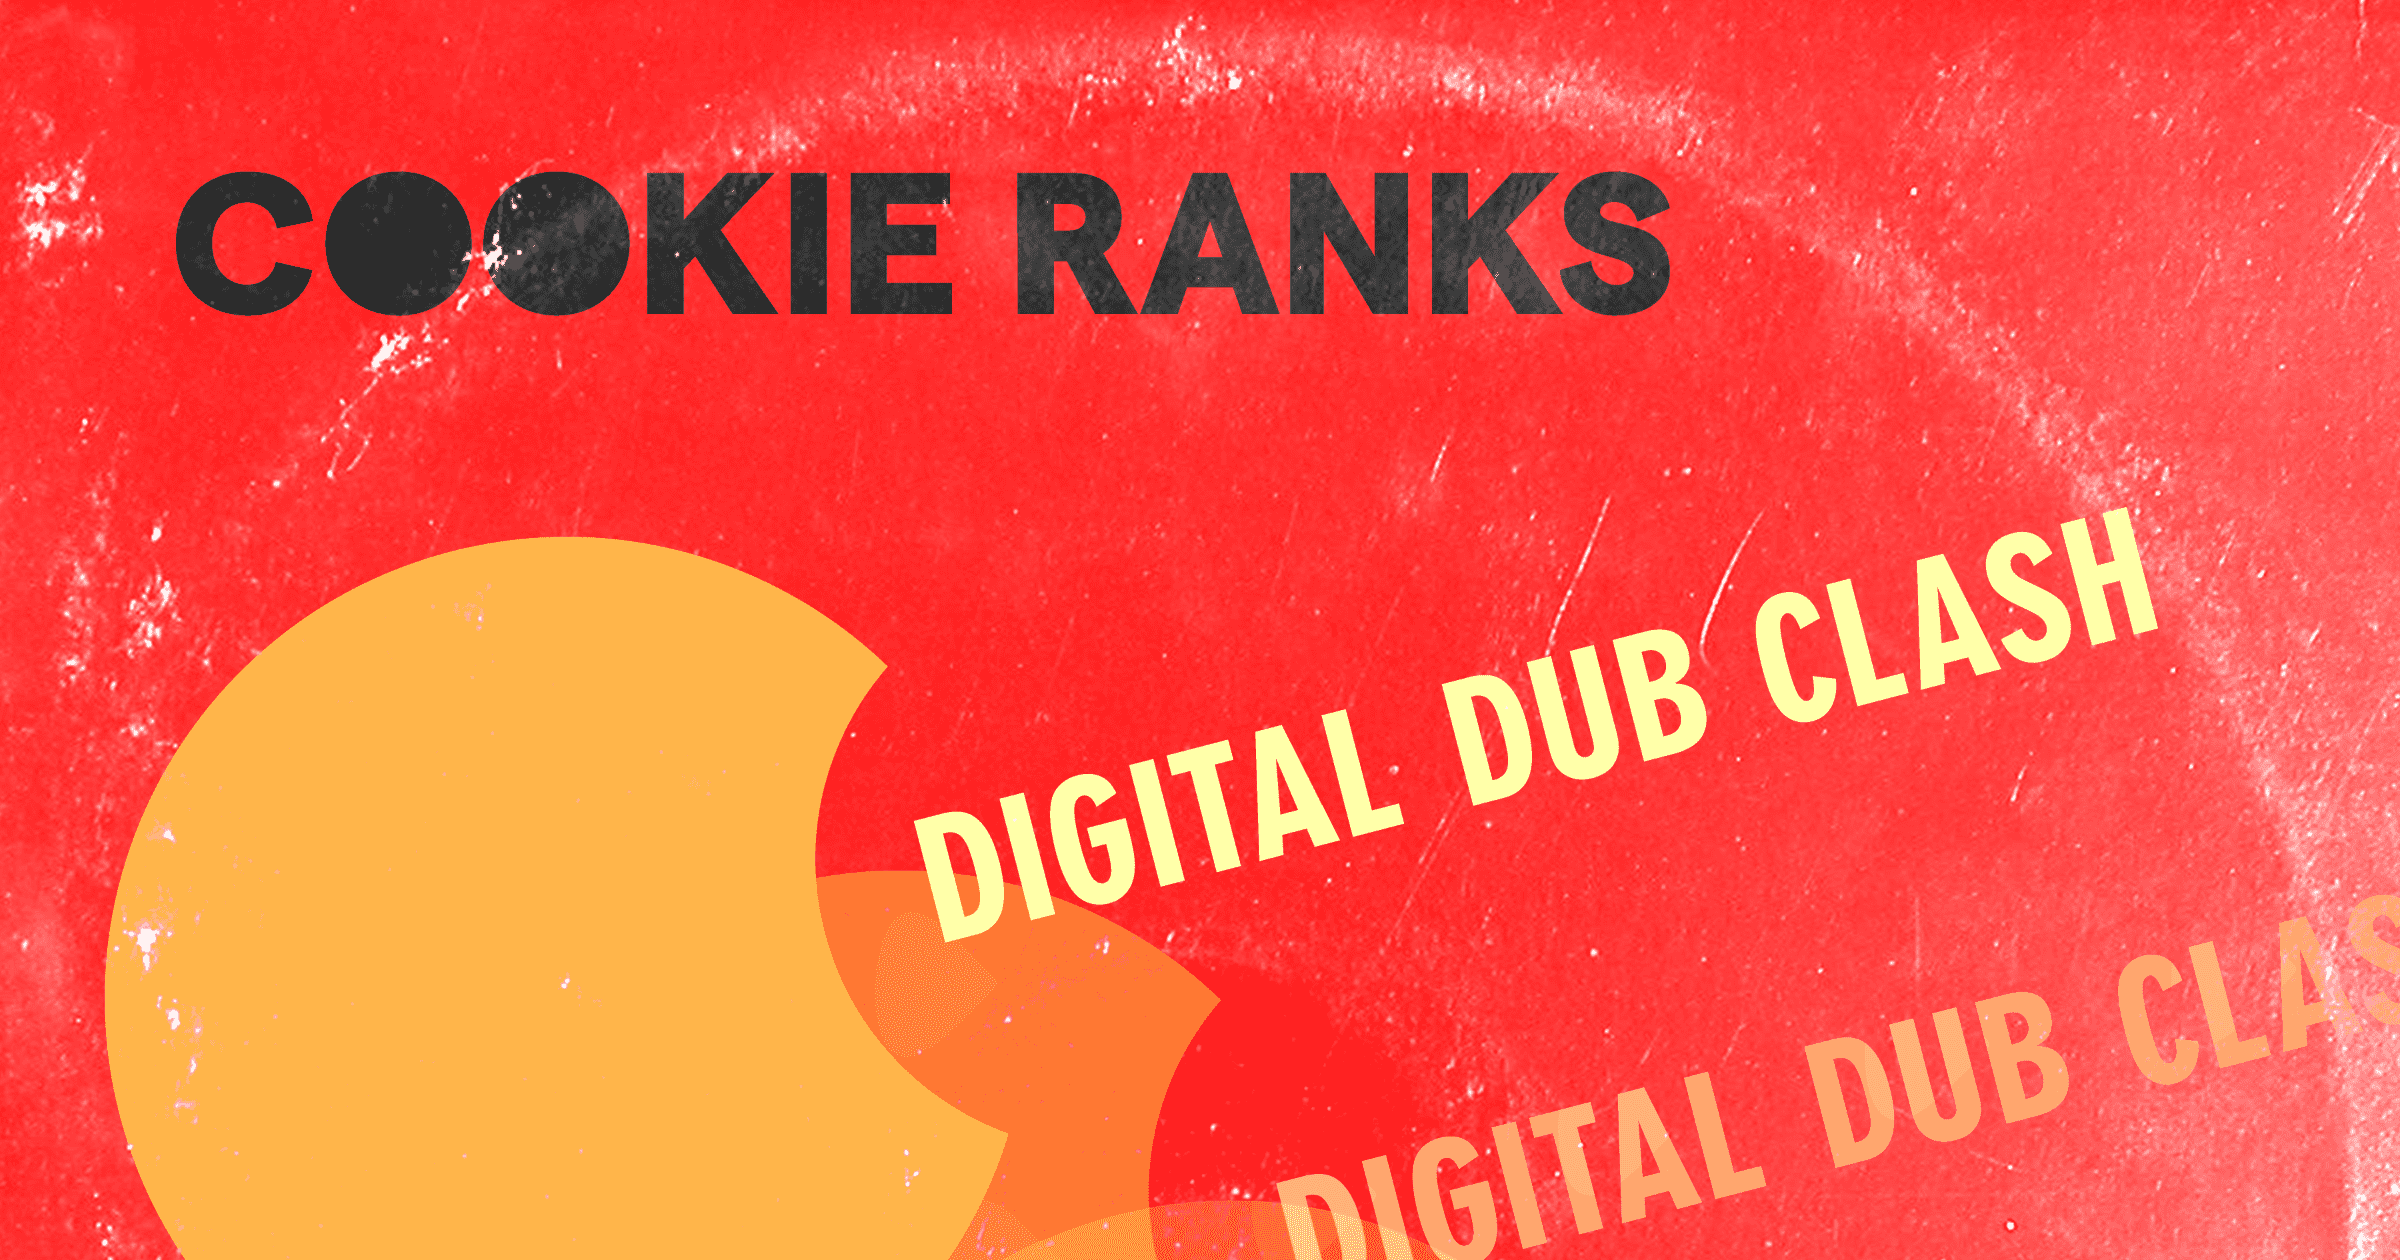 Cookie Ranks - Digital Dub Clash cover art